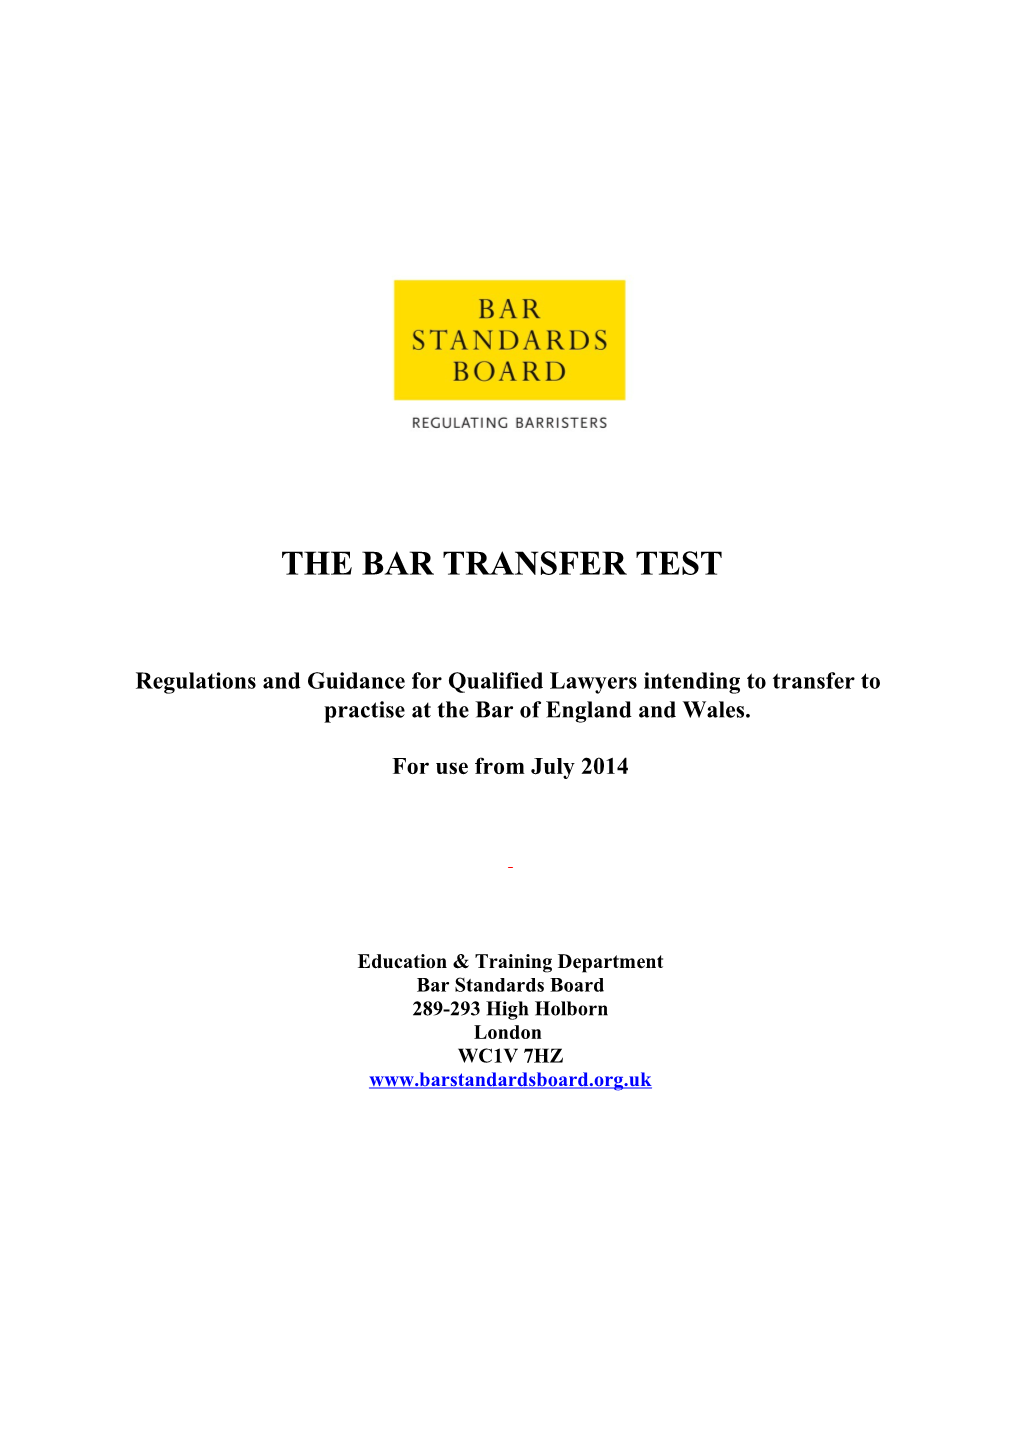 The Bar Transfer Test